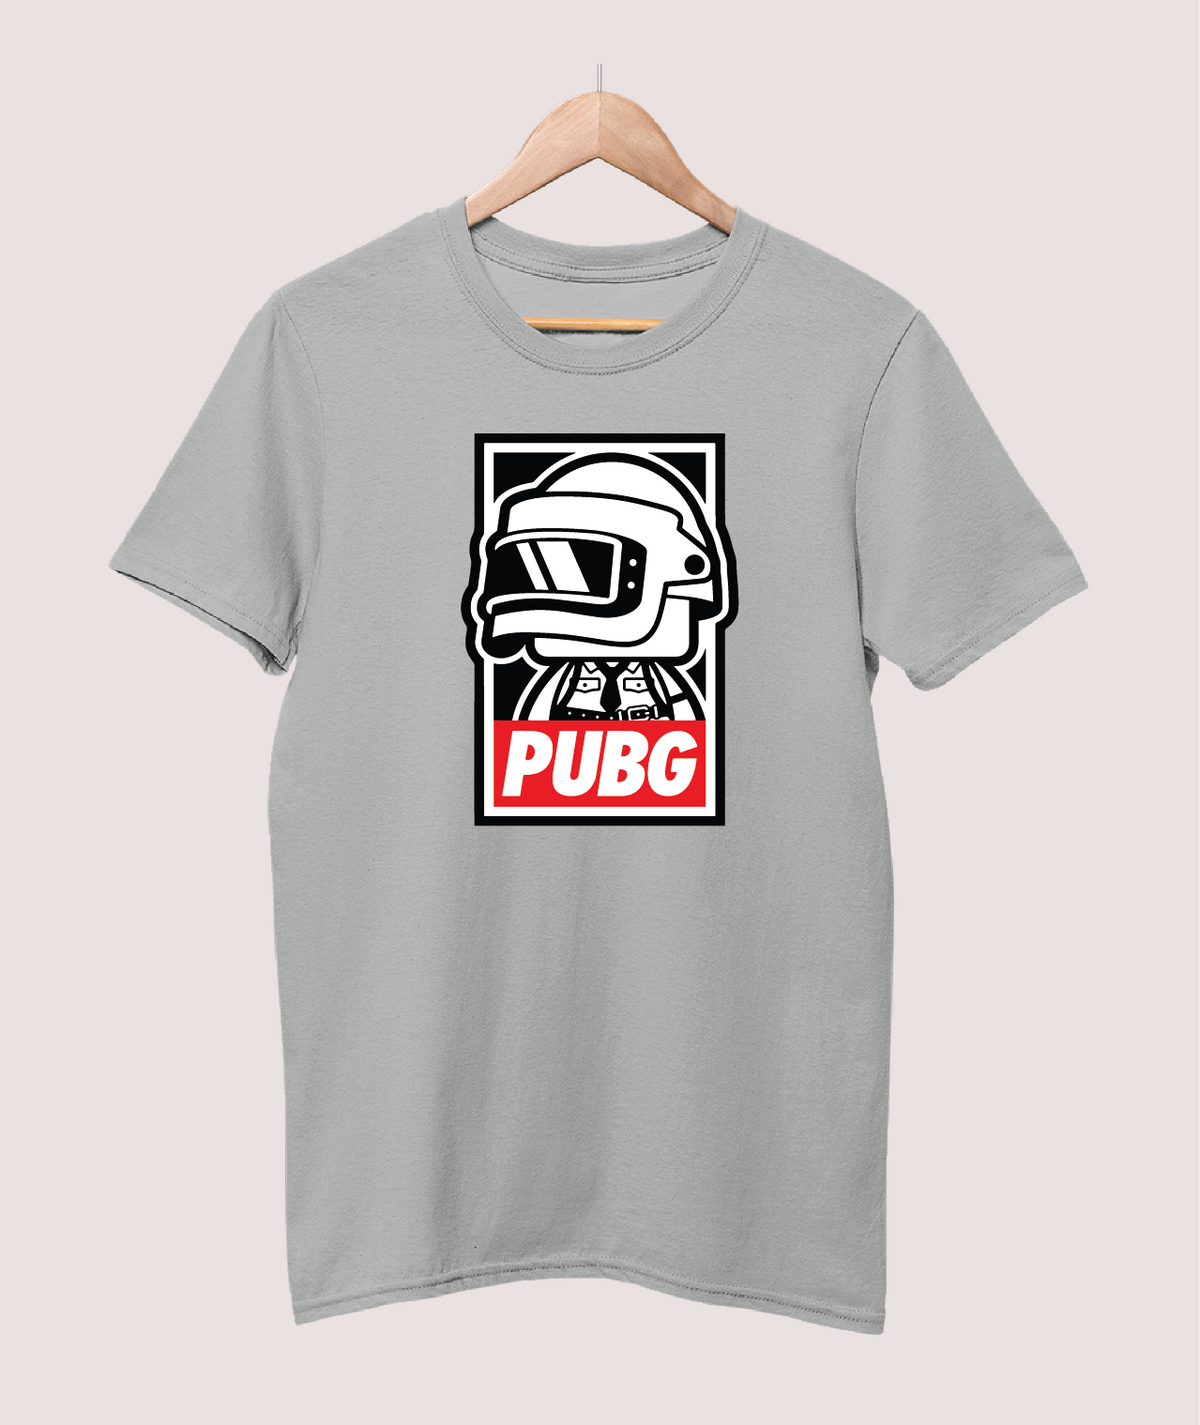 PUBG 1 gaming T-shirt